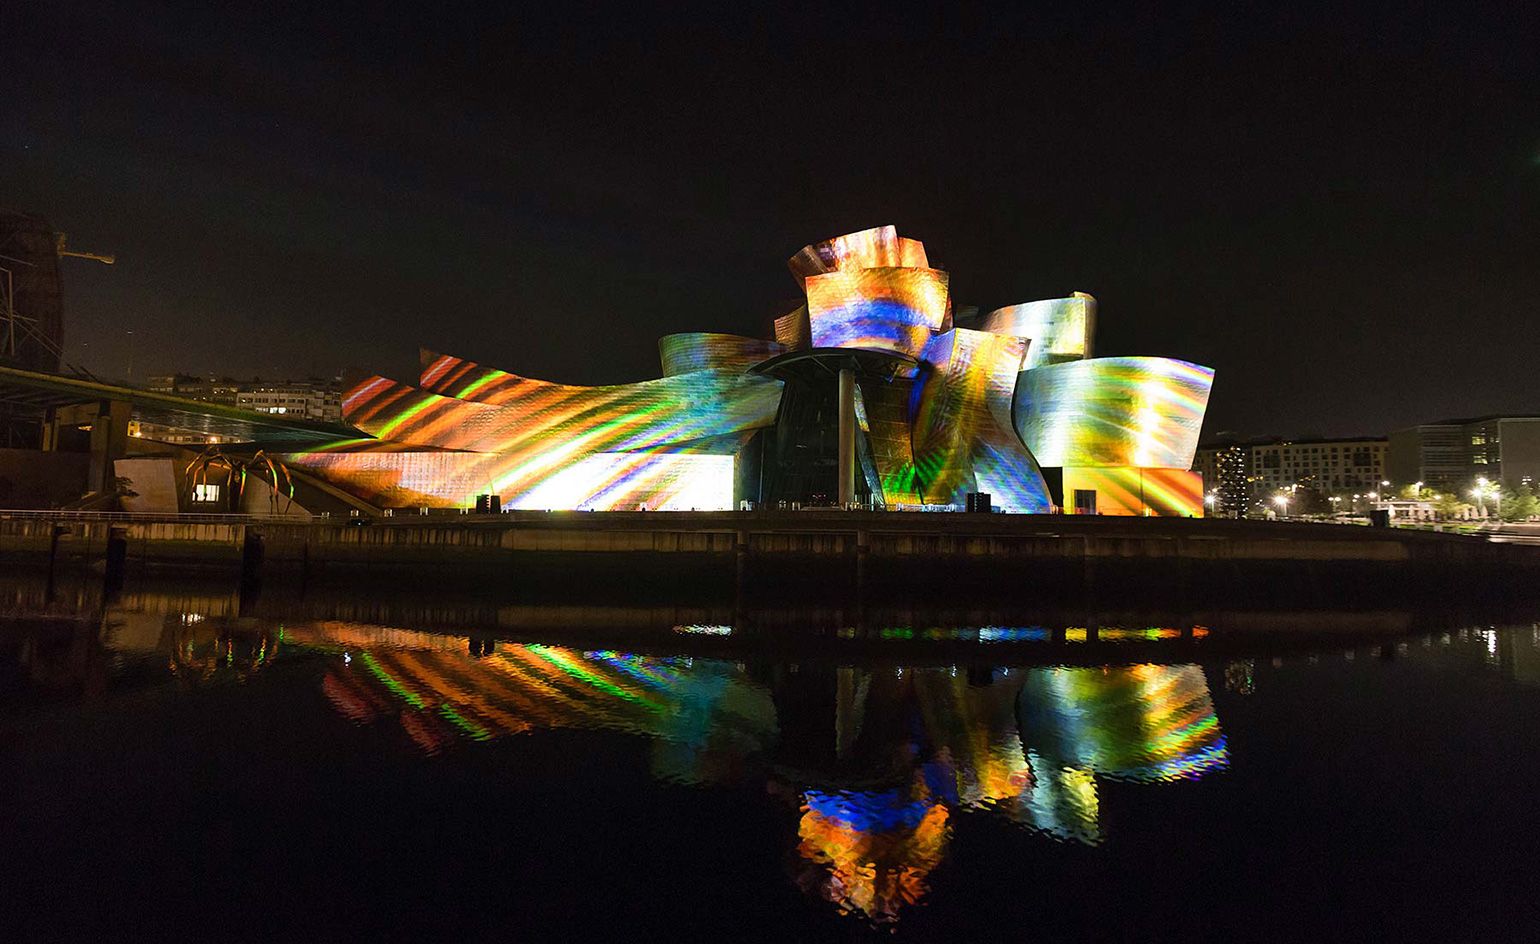 BirtHDay Suit Guggenheim Bilbao Is Dressed In Light To Celebrate